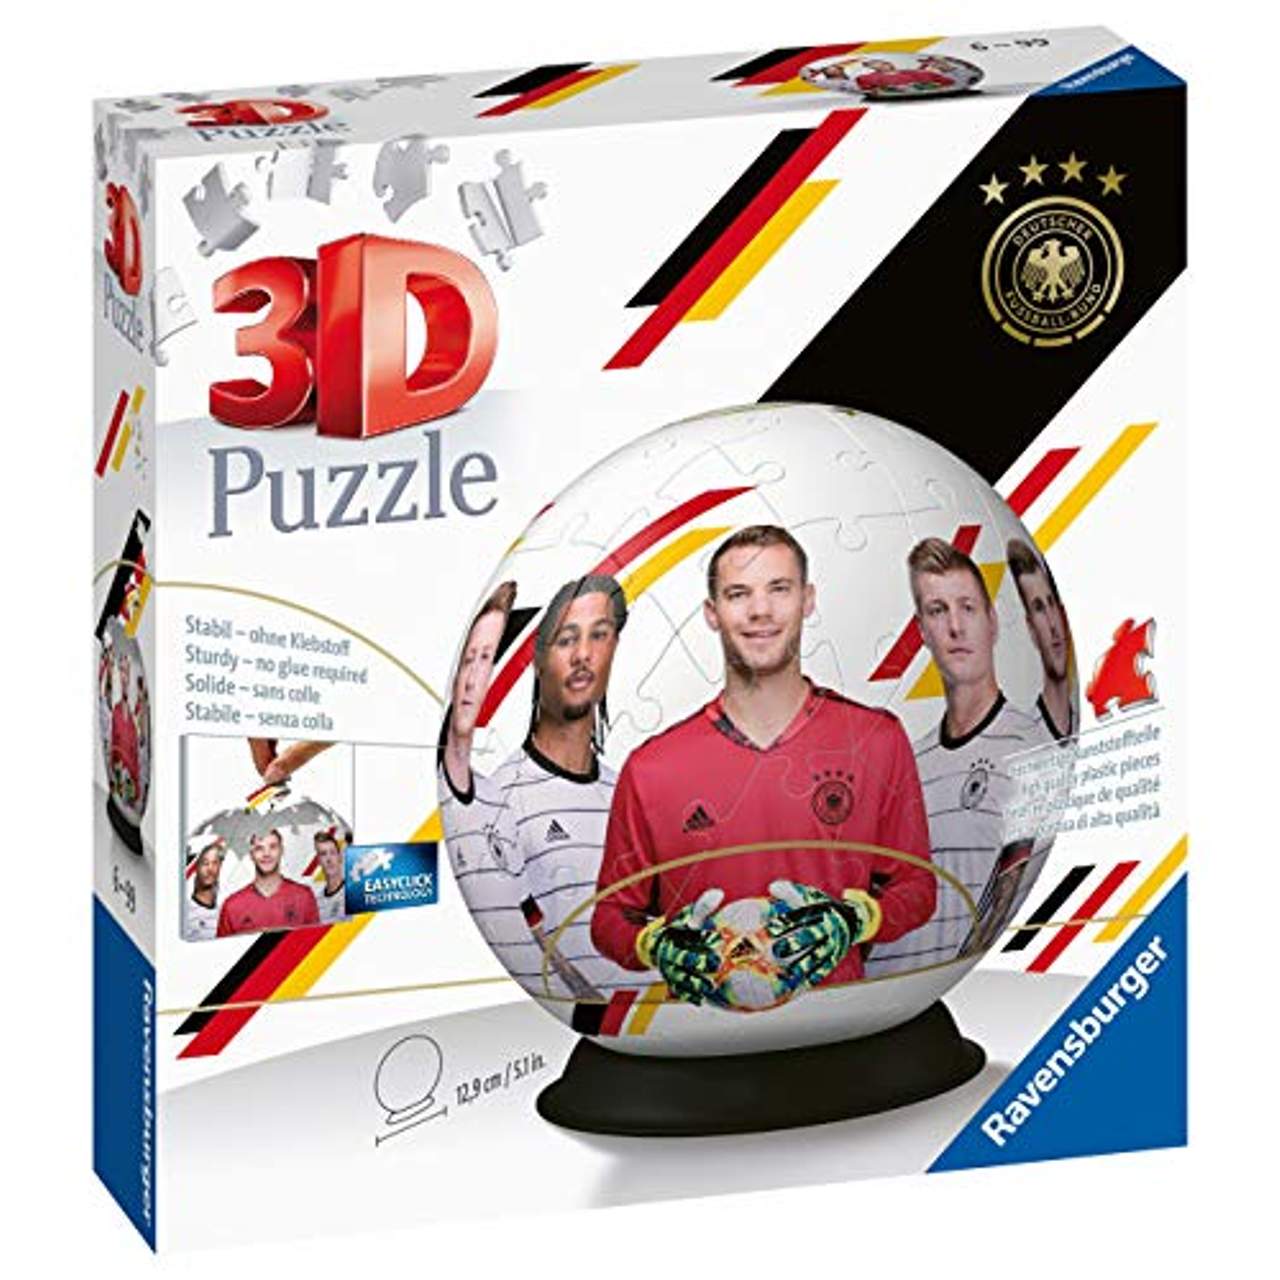 Ravensburger 3D Puzzle 11181 Die Mannschaft